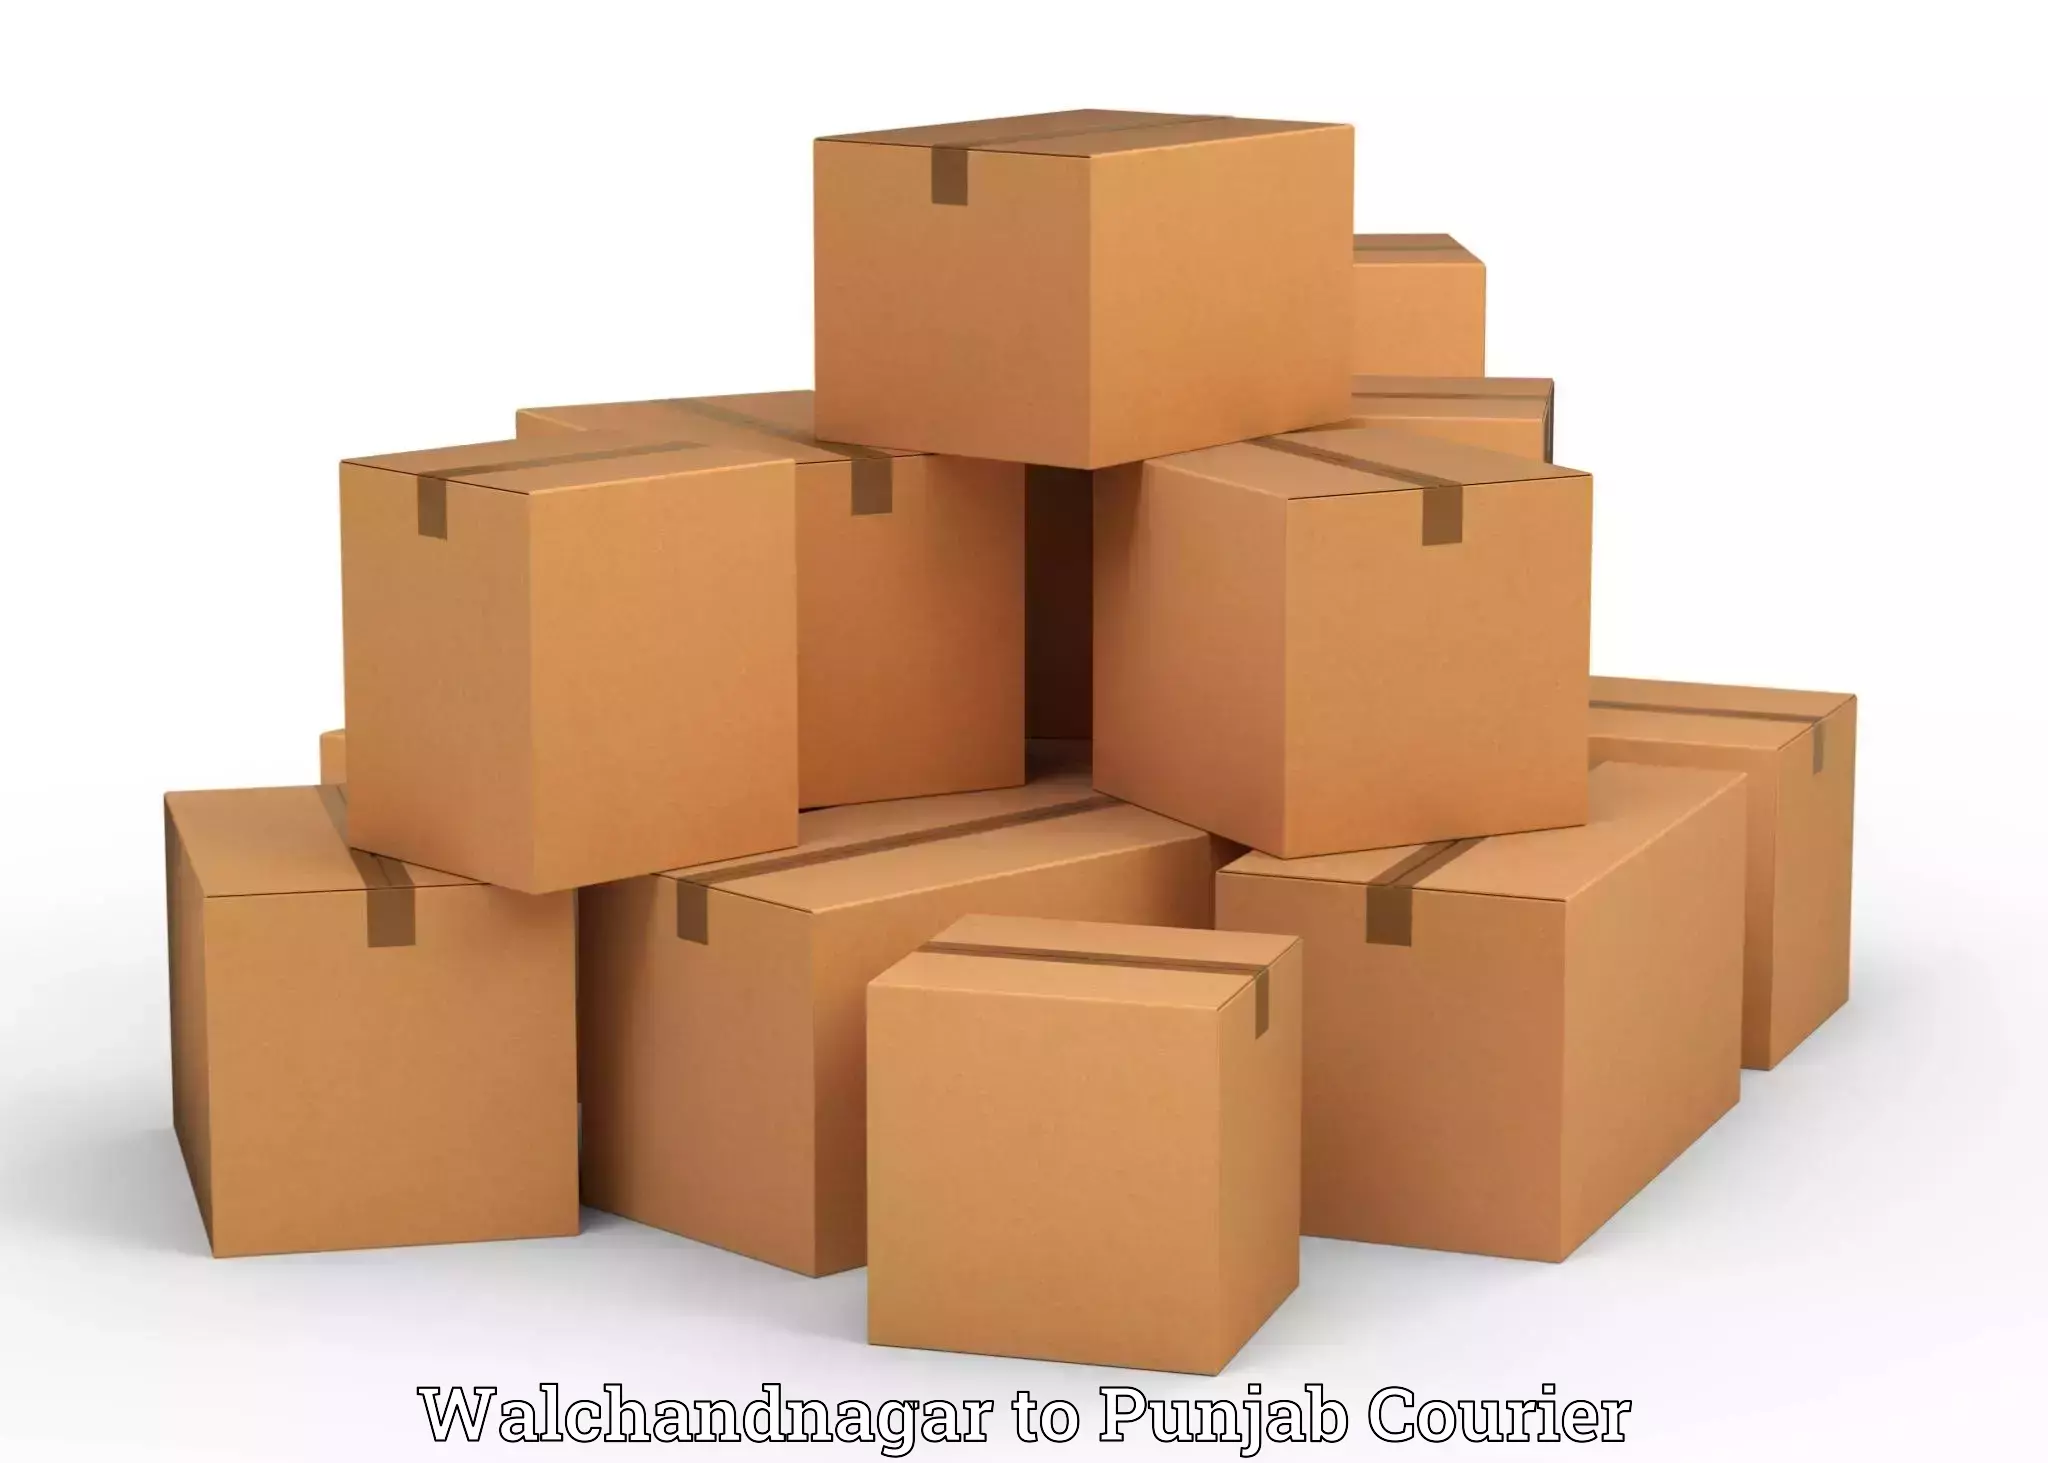 Luggage shipment specialists Walchandnagar to Zirakpur